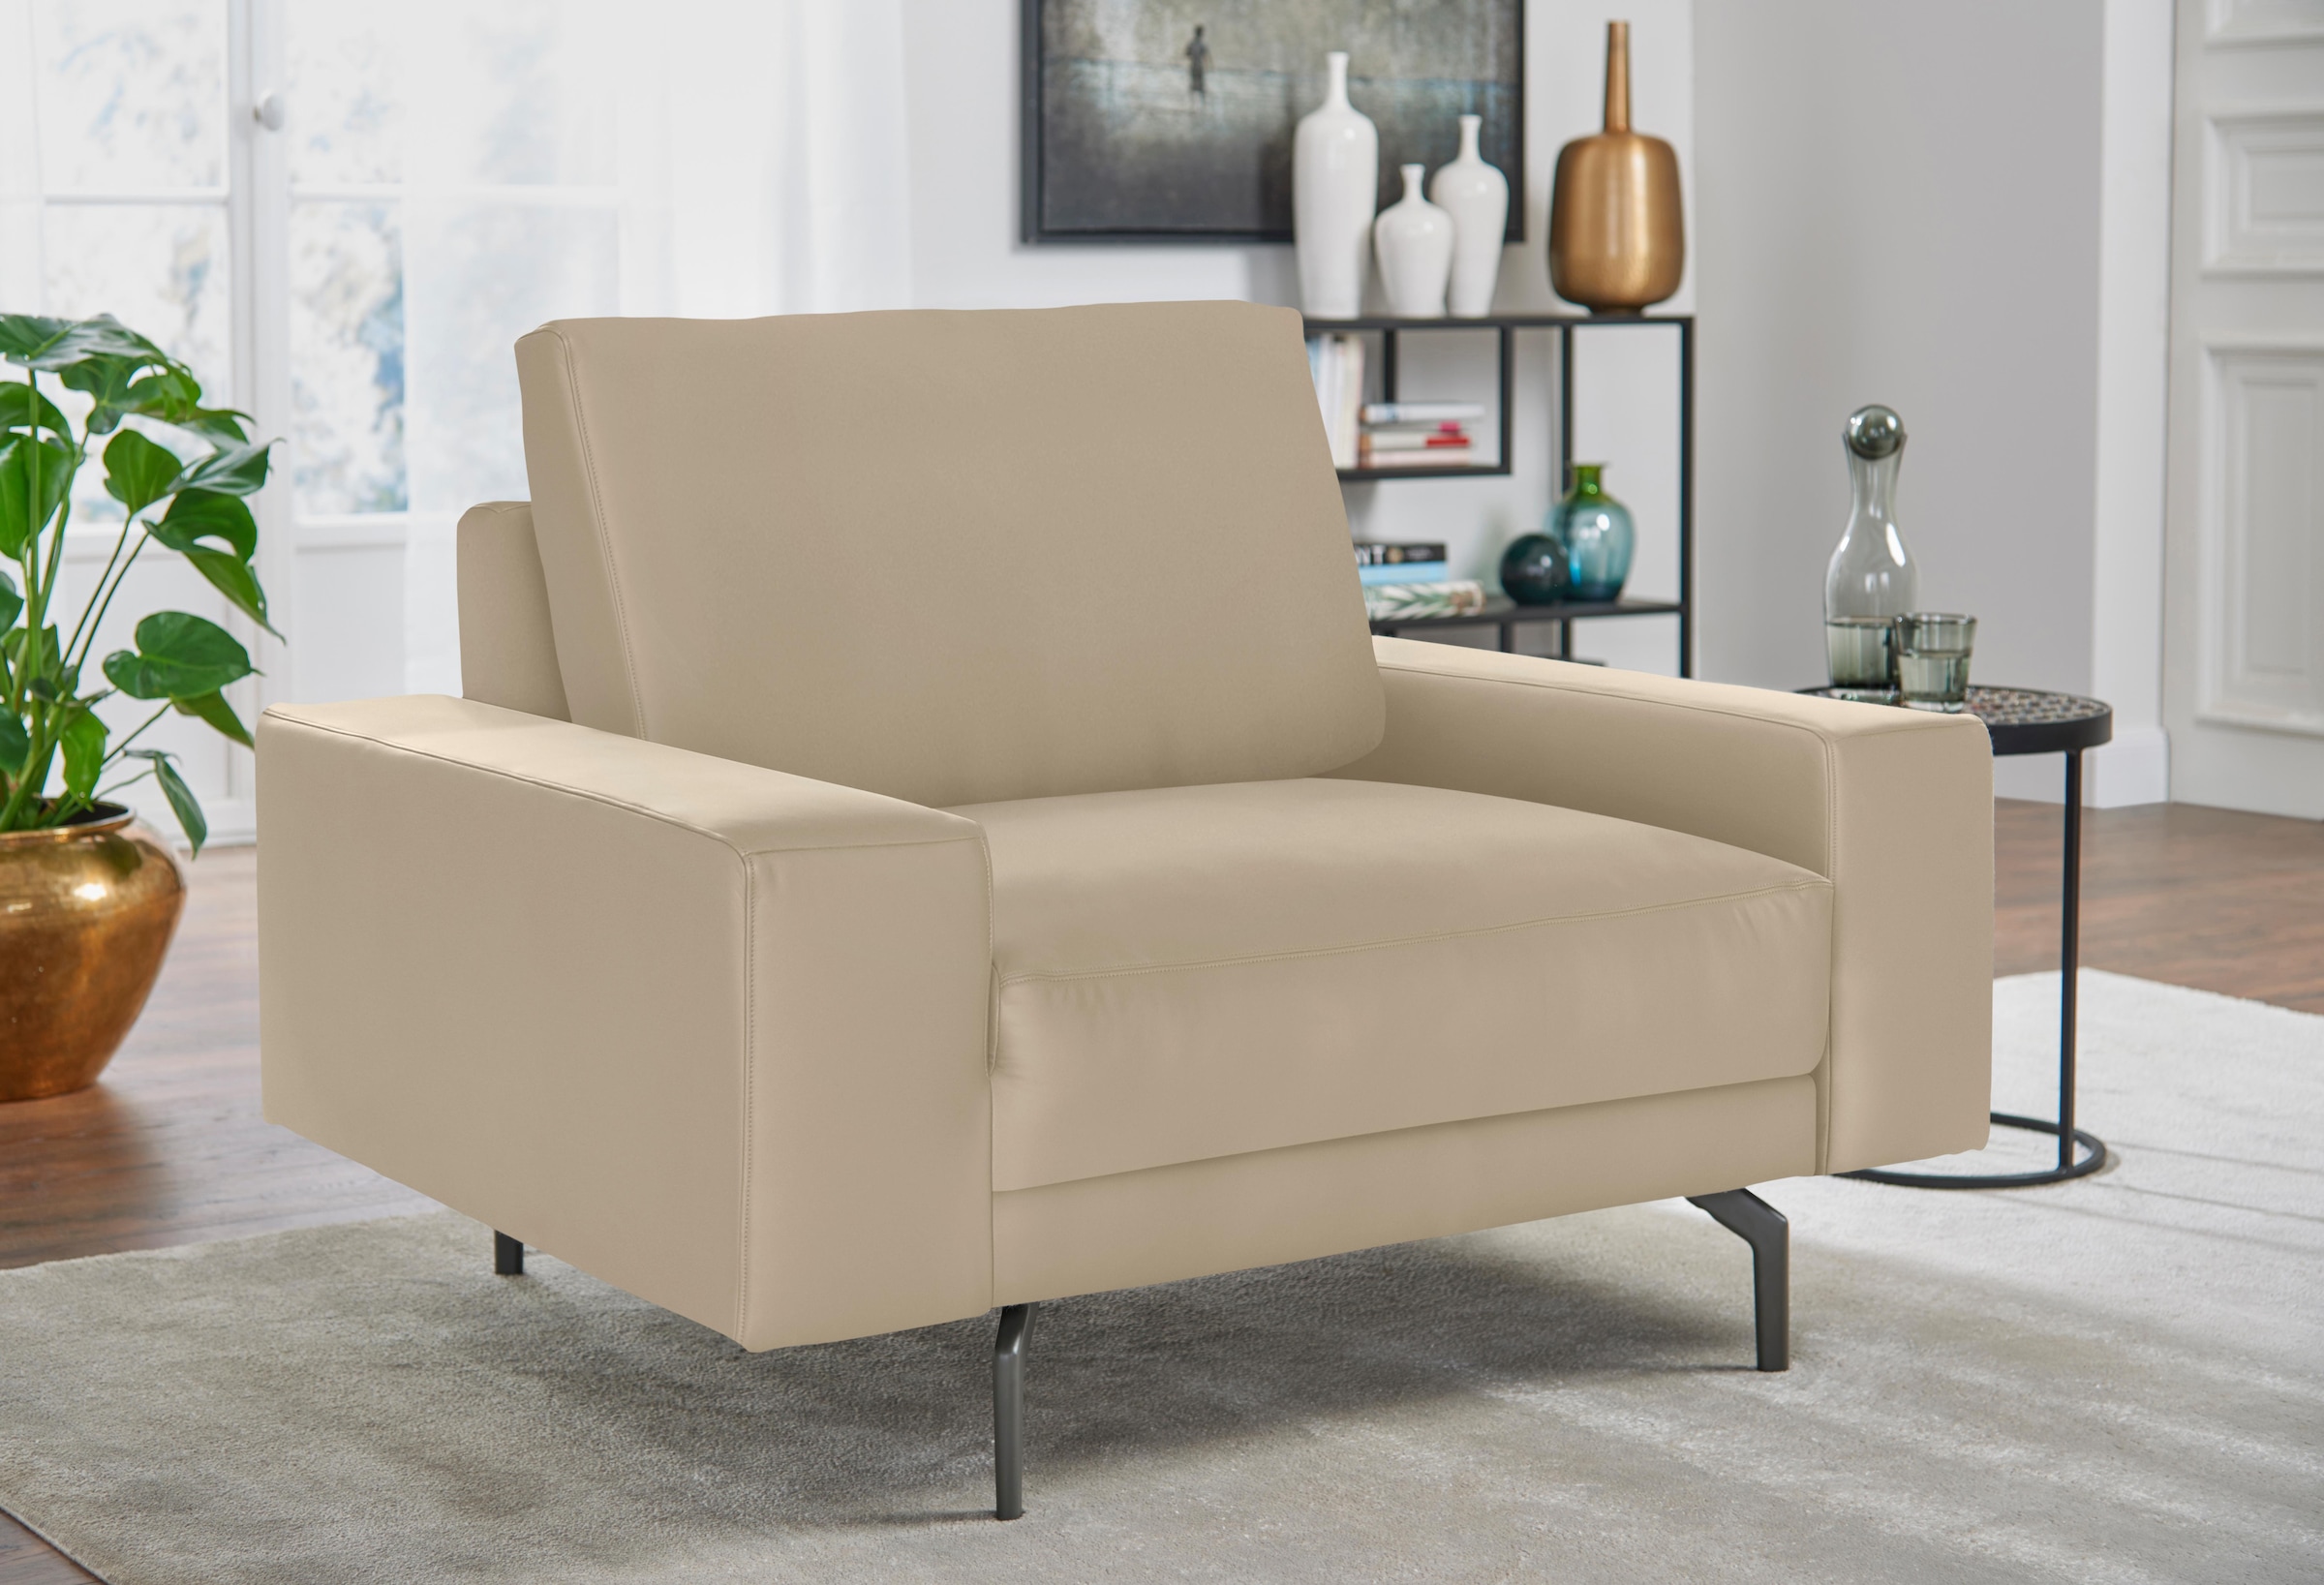 hülsta sofa Sessel »hs.450«, Armlehne breit niedrig, Alugussfüße in umbragrau, Breite 120 cm